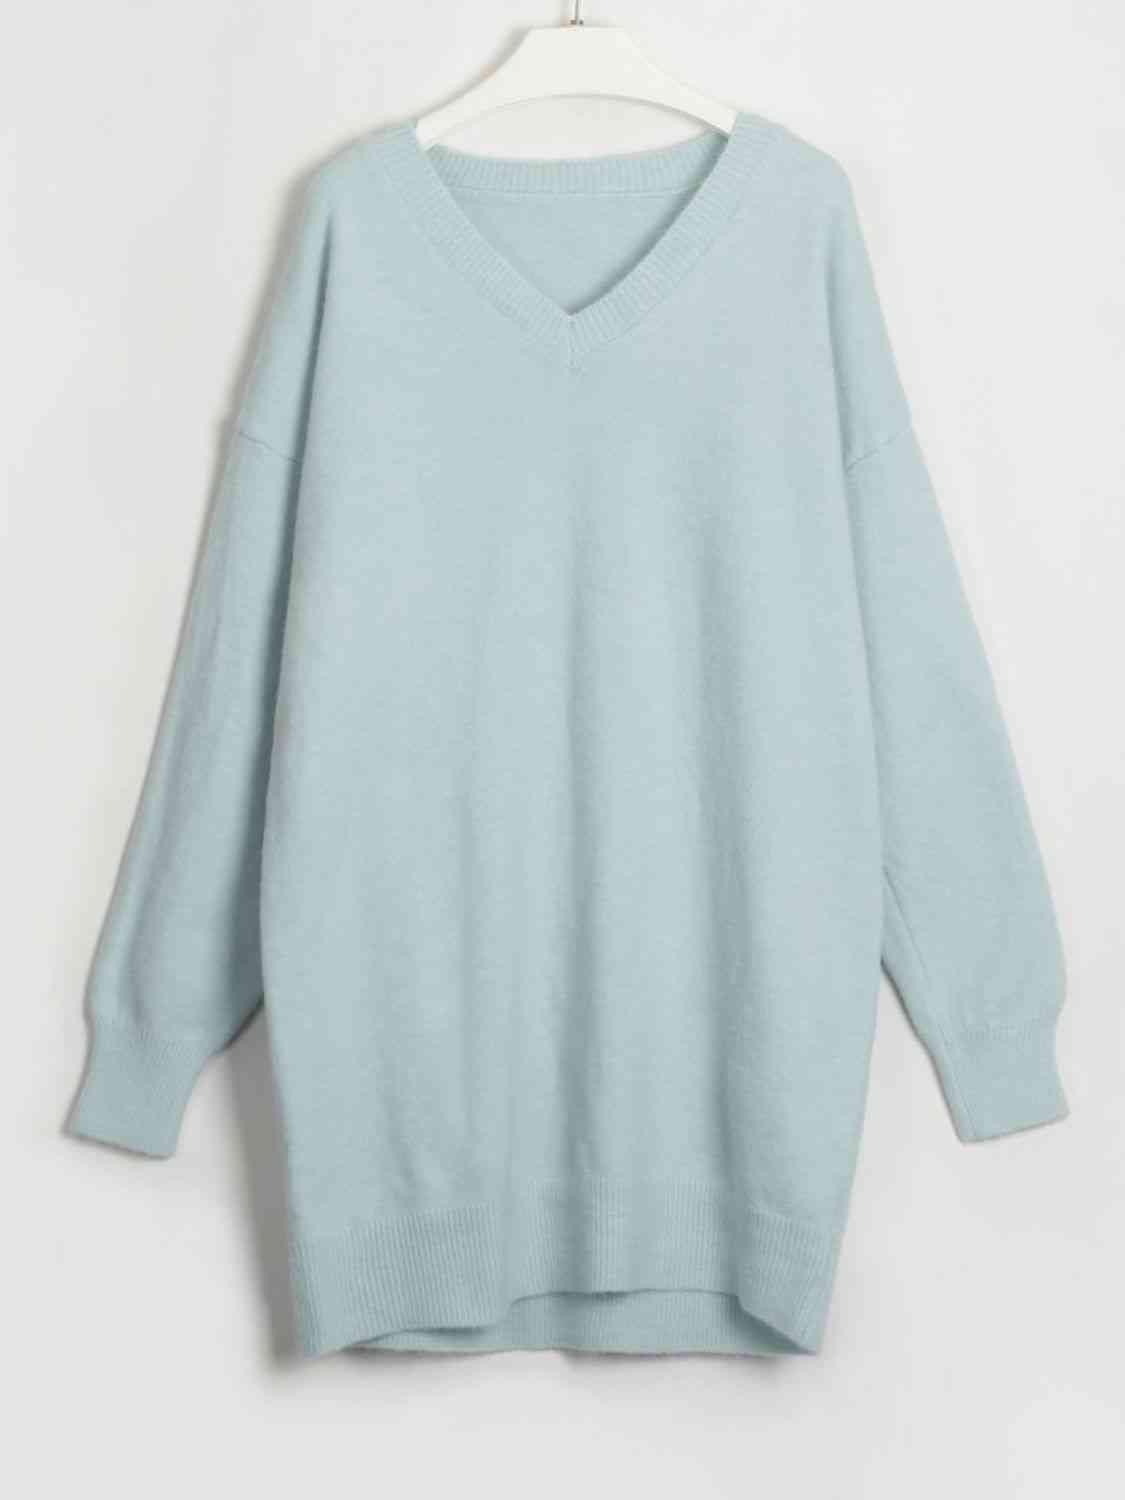 Snug In Style V-Neck Dropped Shoulder Sweater Dress-MXSTUDIO.COM